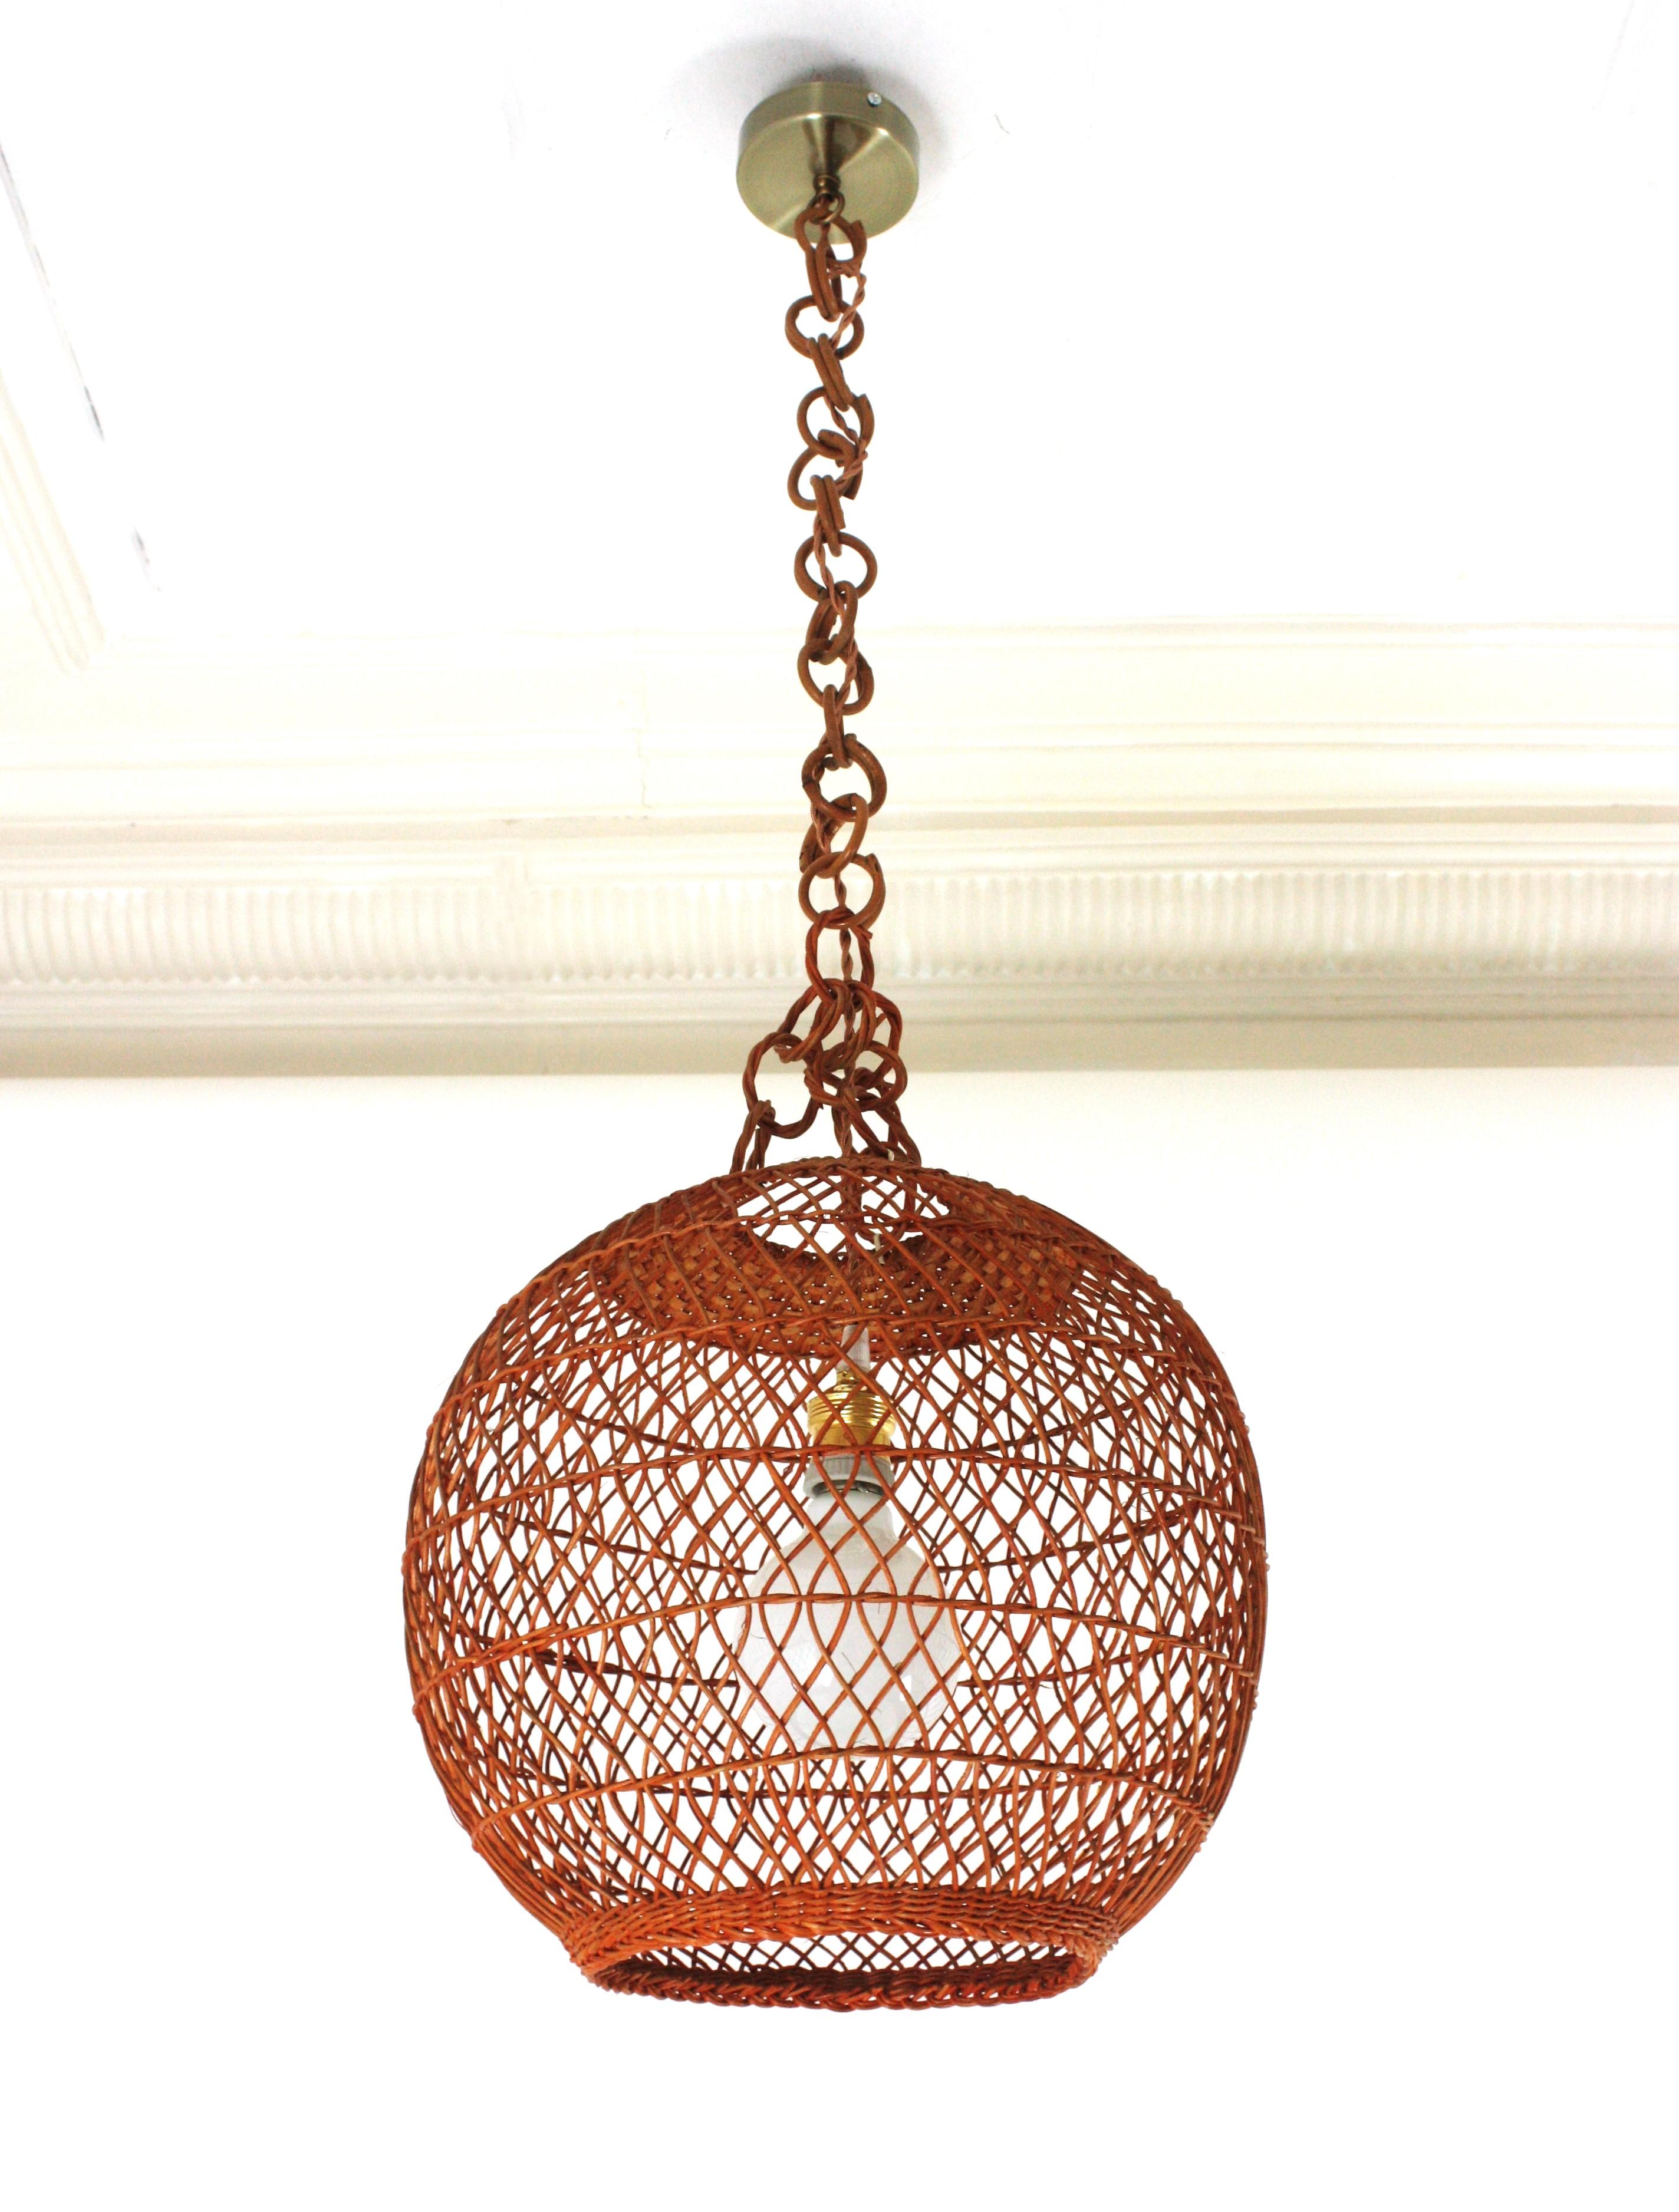 Woven Spanish Handwoven Wicker Rattan Globe Pendant Light / Lantern For Sale